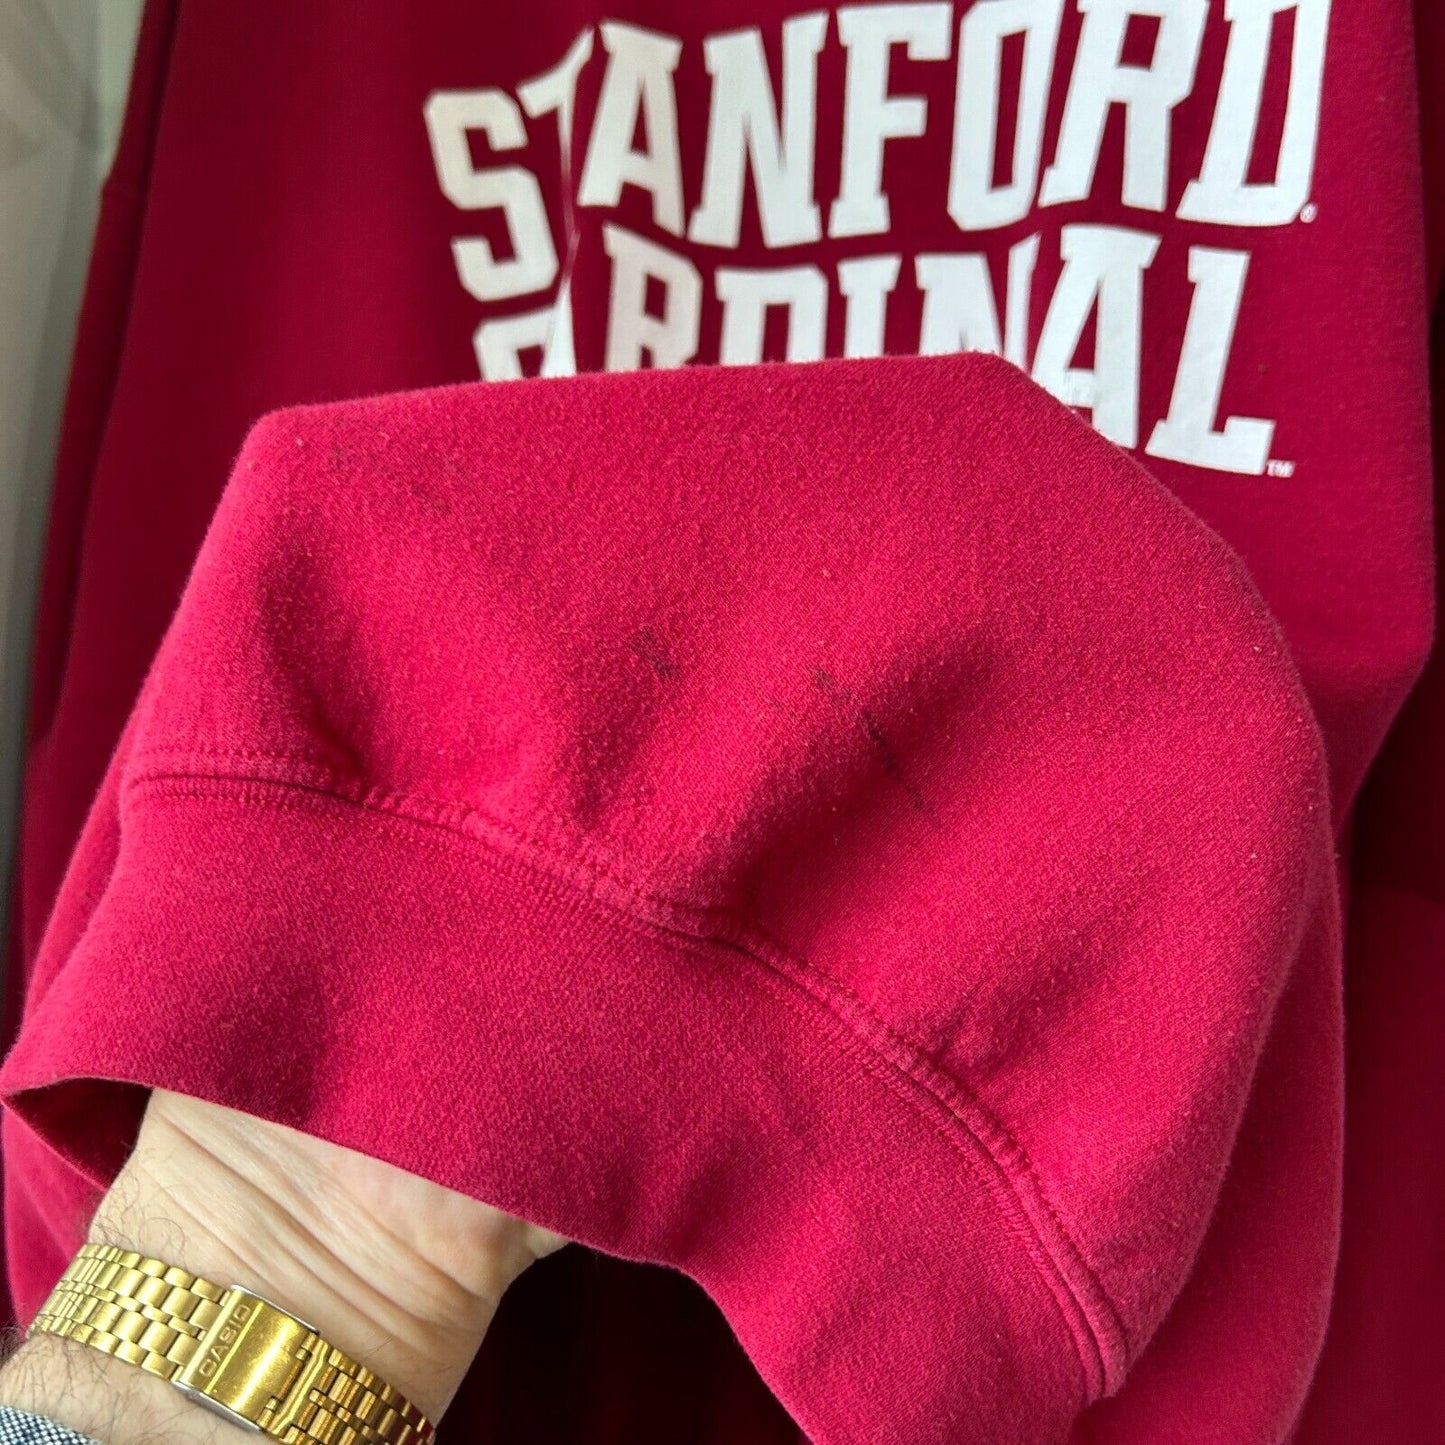 VINTAGE | Stanford Cardinal University Crewneck Sweater sz XXL Adult